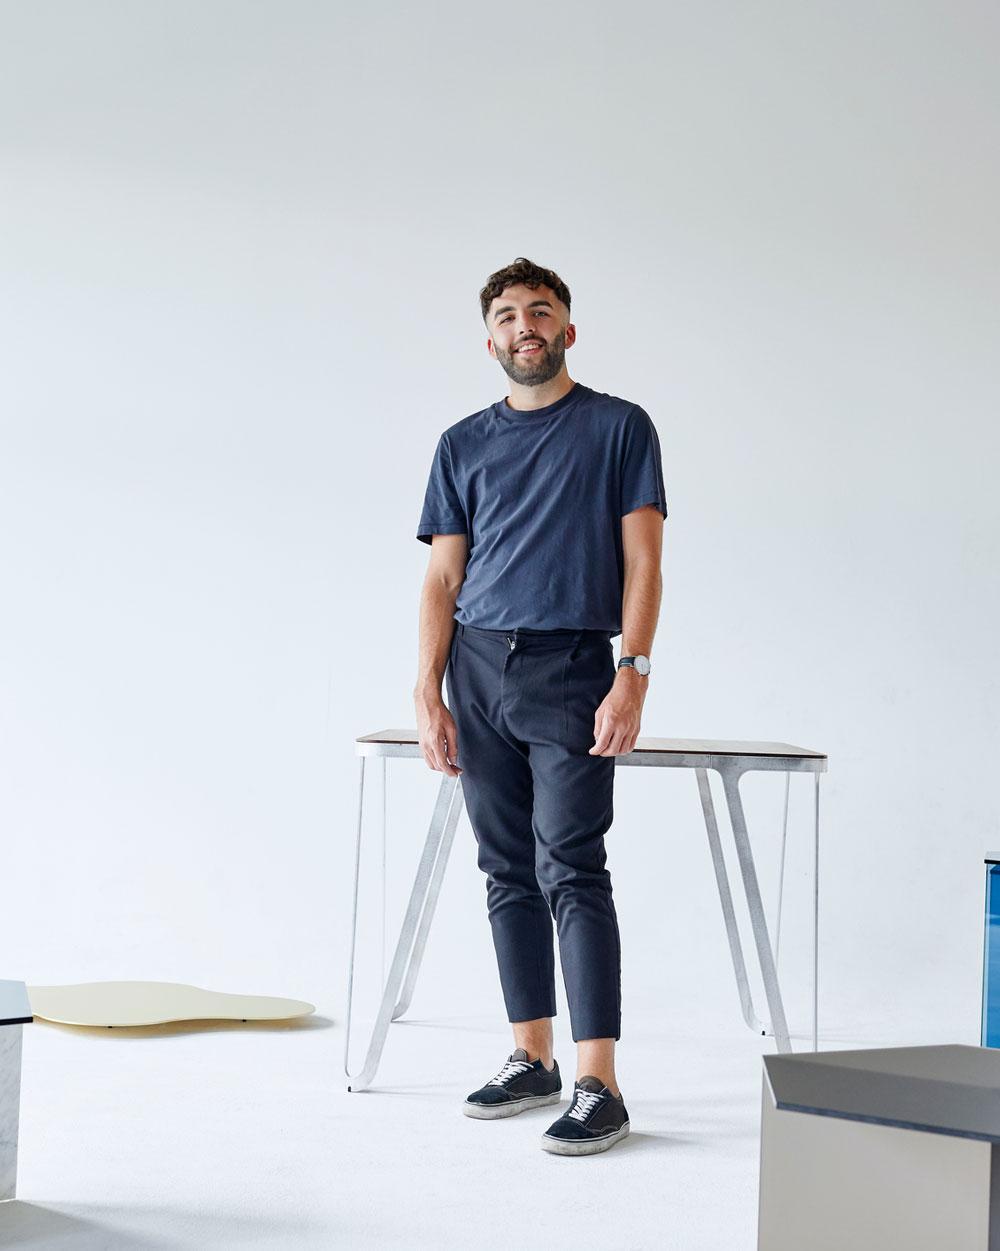 A startup employee standing